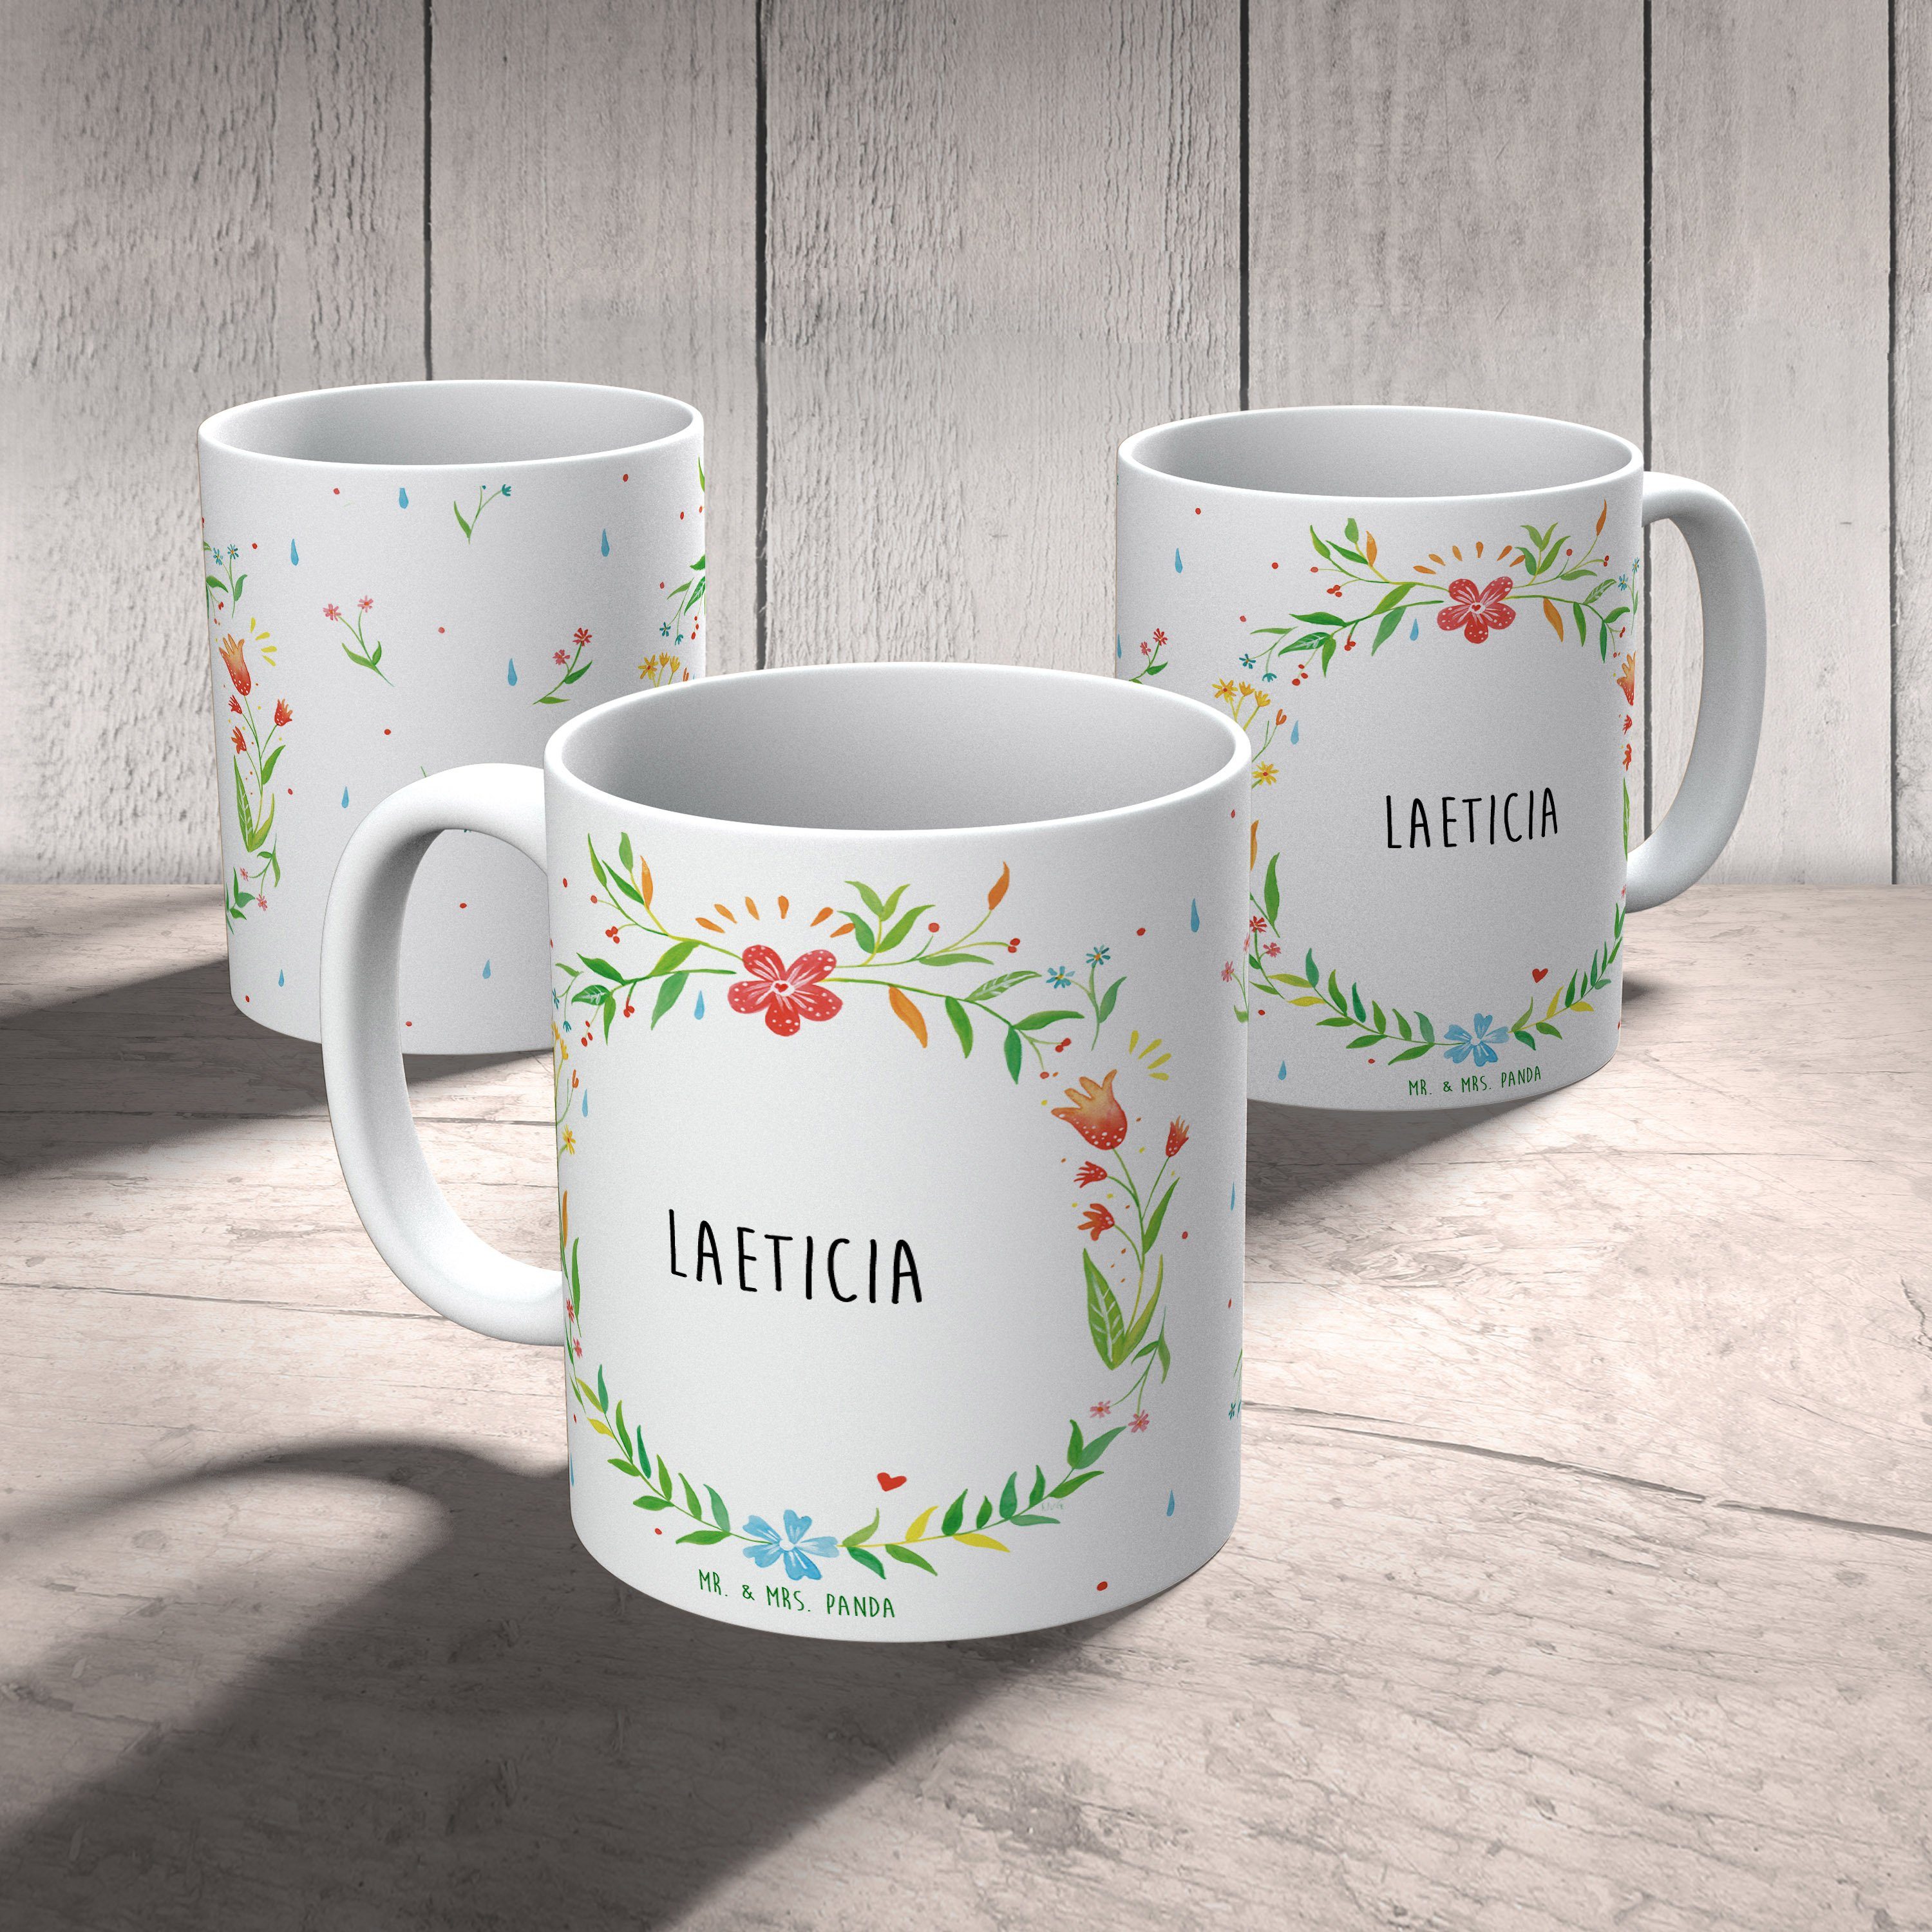 Mr. & Mrs. Panda Laeticia Teebec, Tasse Tasse Geschenk, Sprüche, - Keramik Kaffeetasse, Keramiktasse